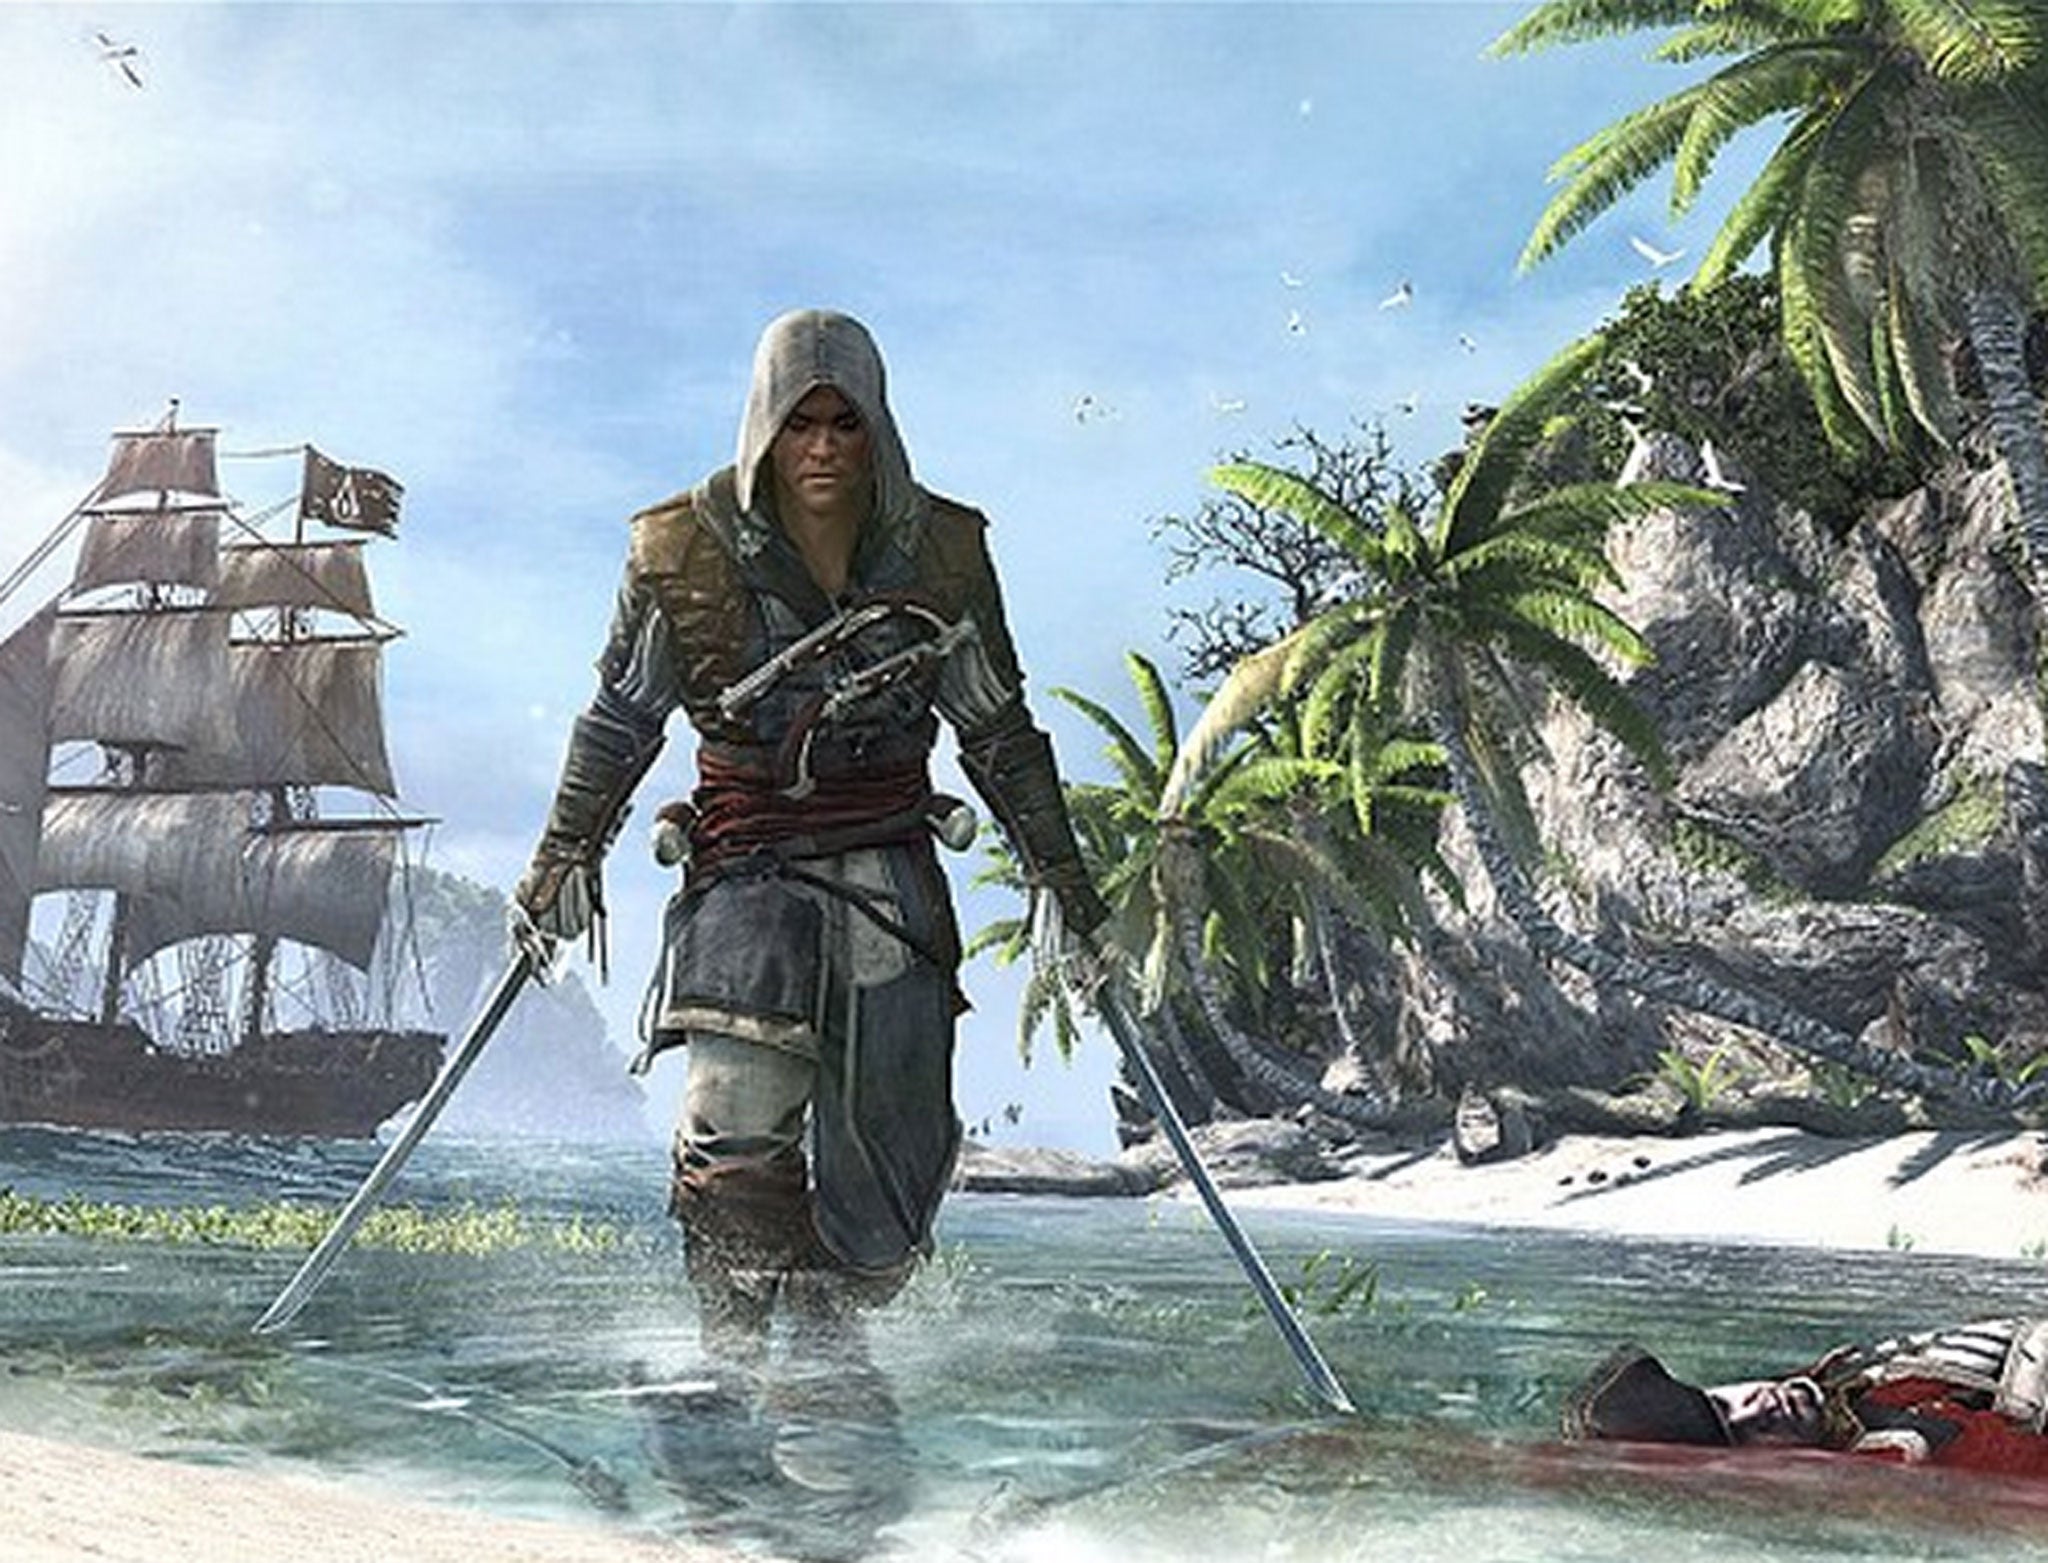 Assassin's Creed 4: Black Flag promises Caribbean pirate adventures